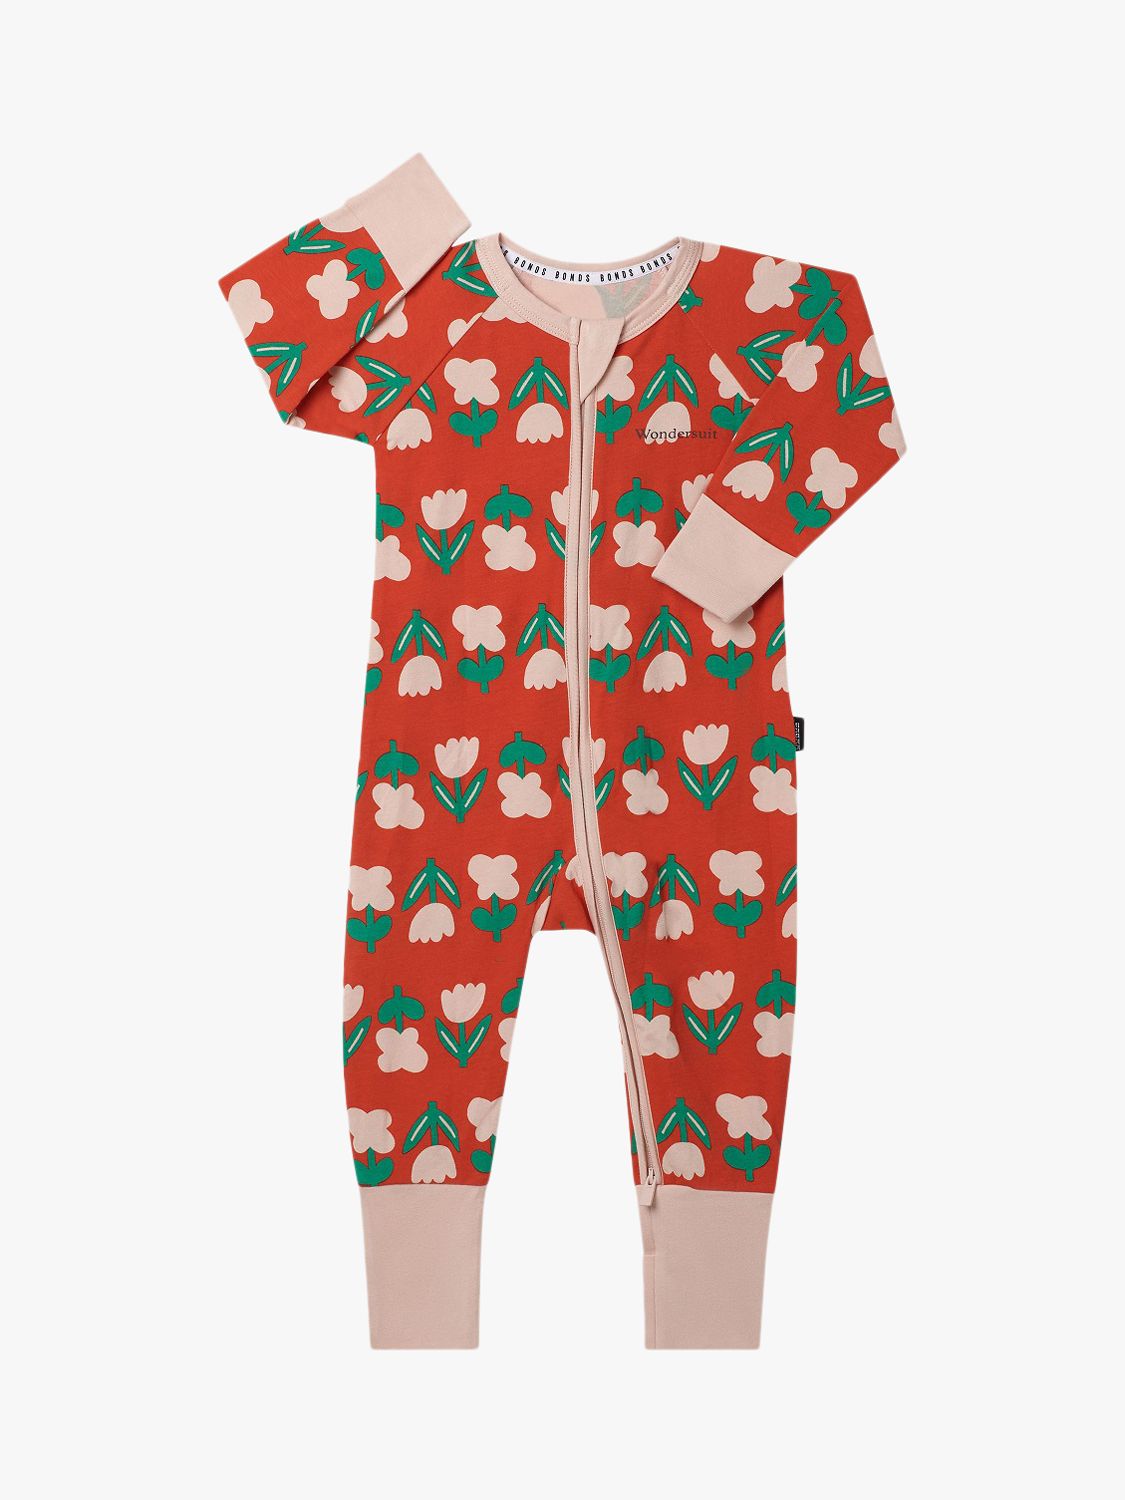 40+ new baby items online. - Bonds Zippy Prints Catalogue